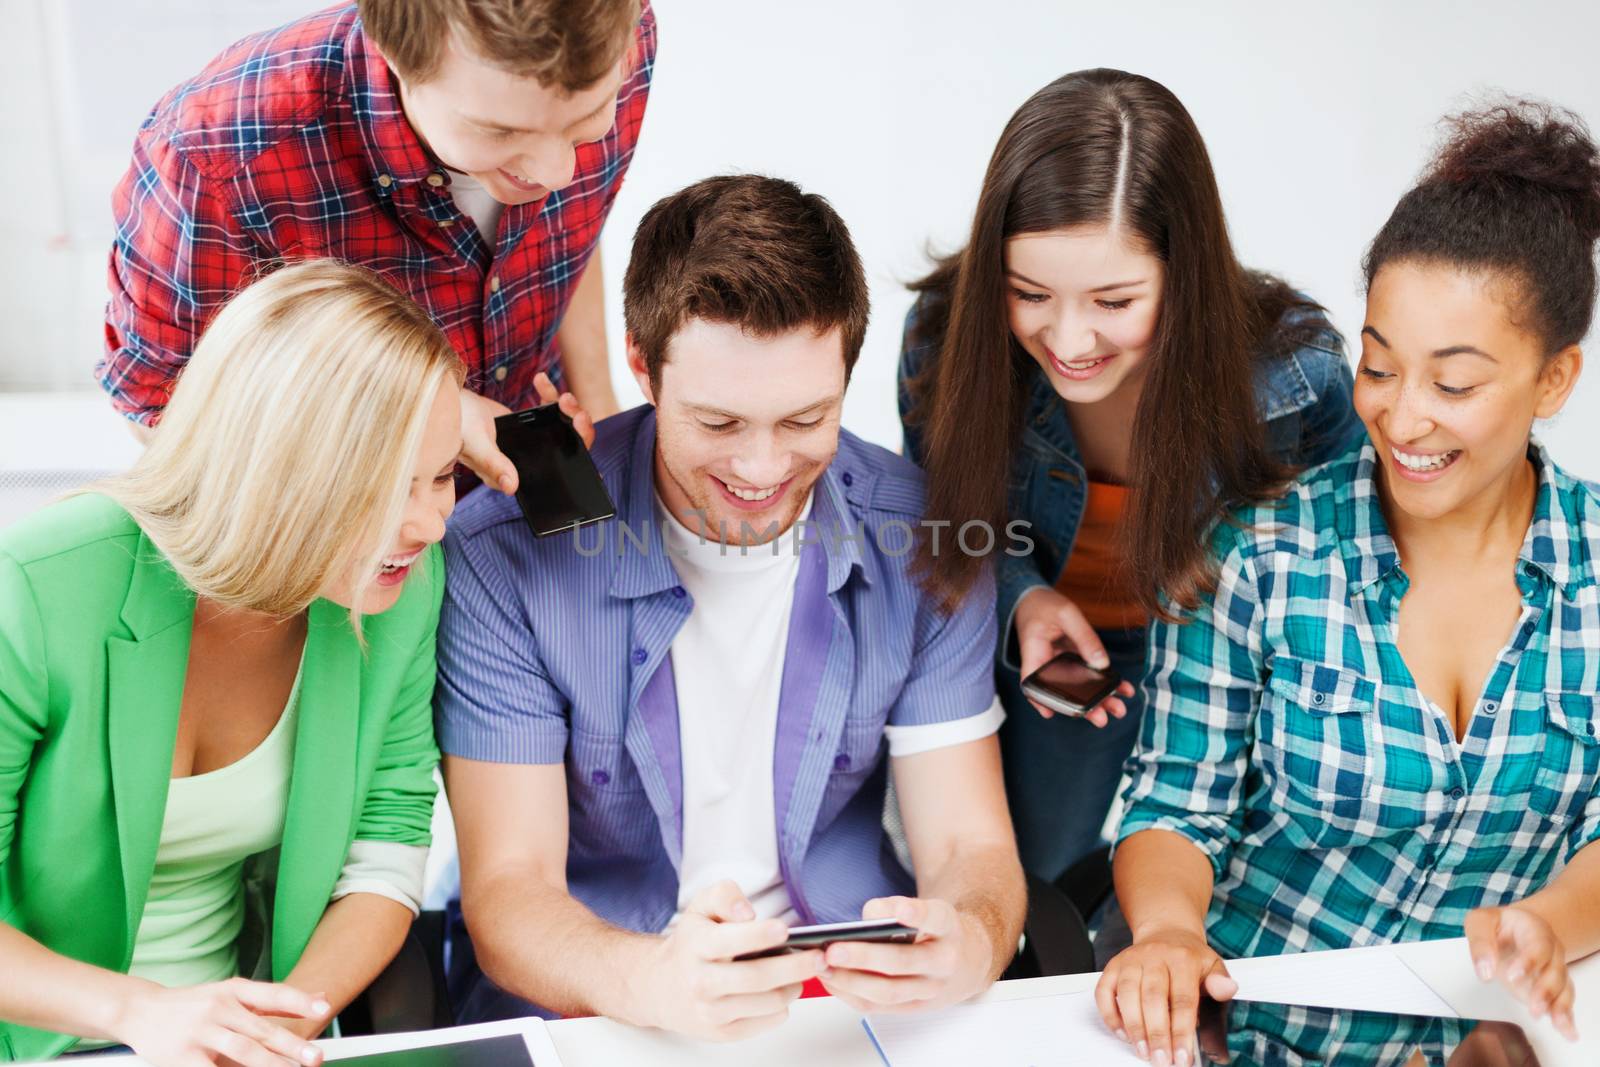 students looking into smartphone at school by dolgachov